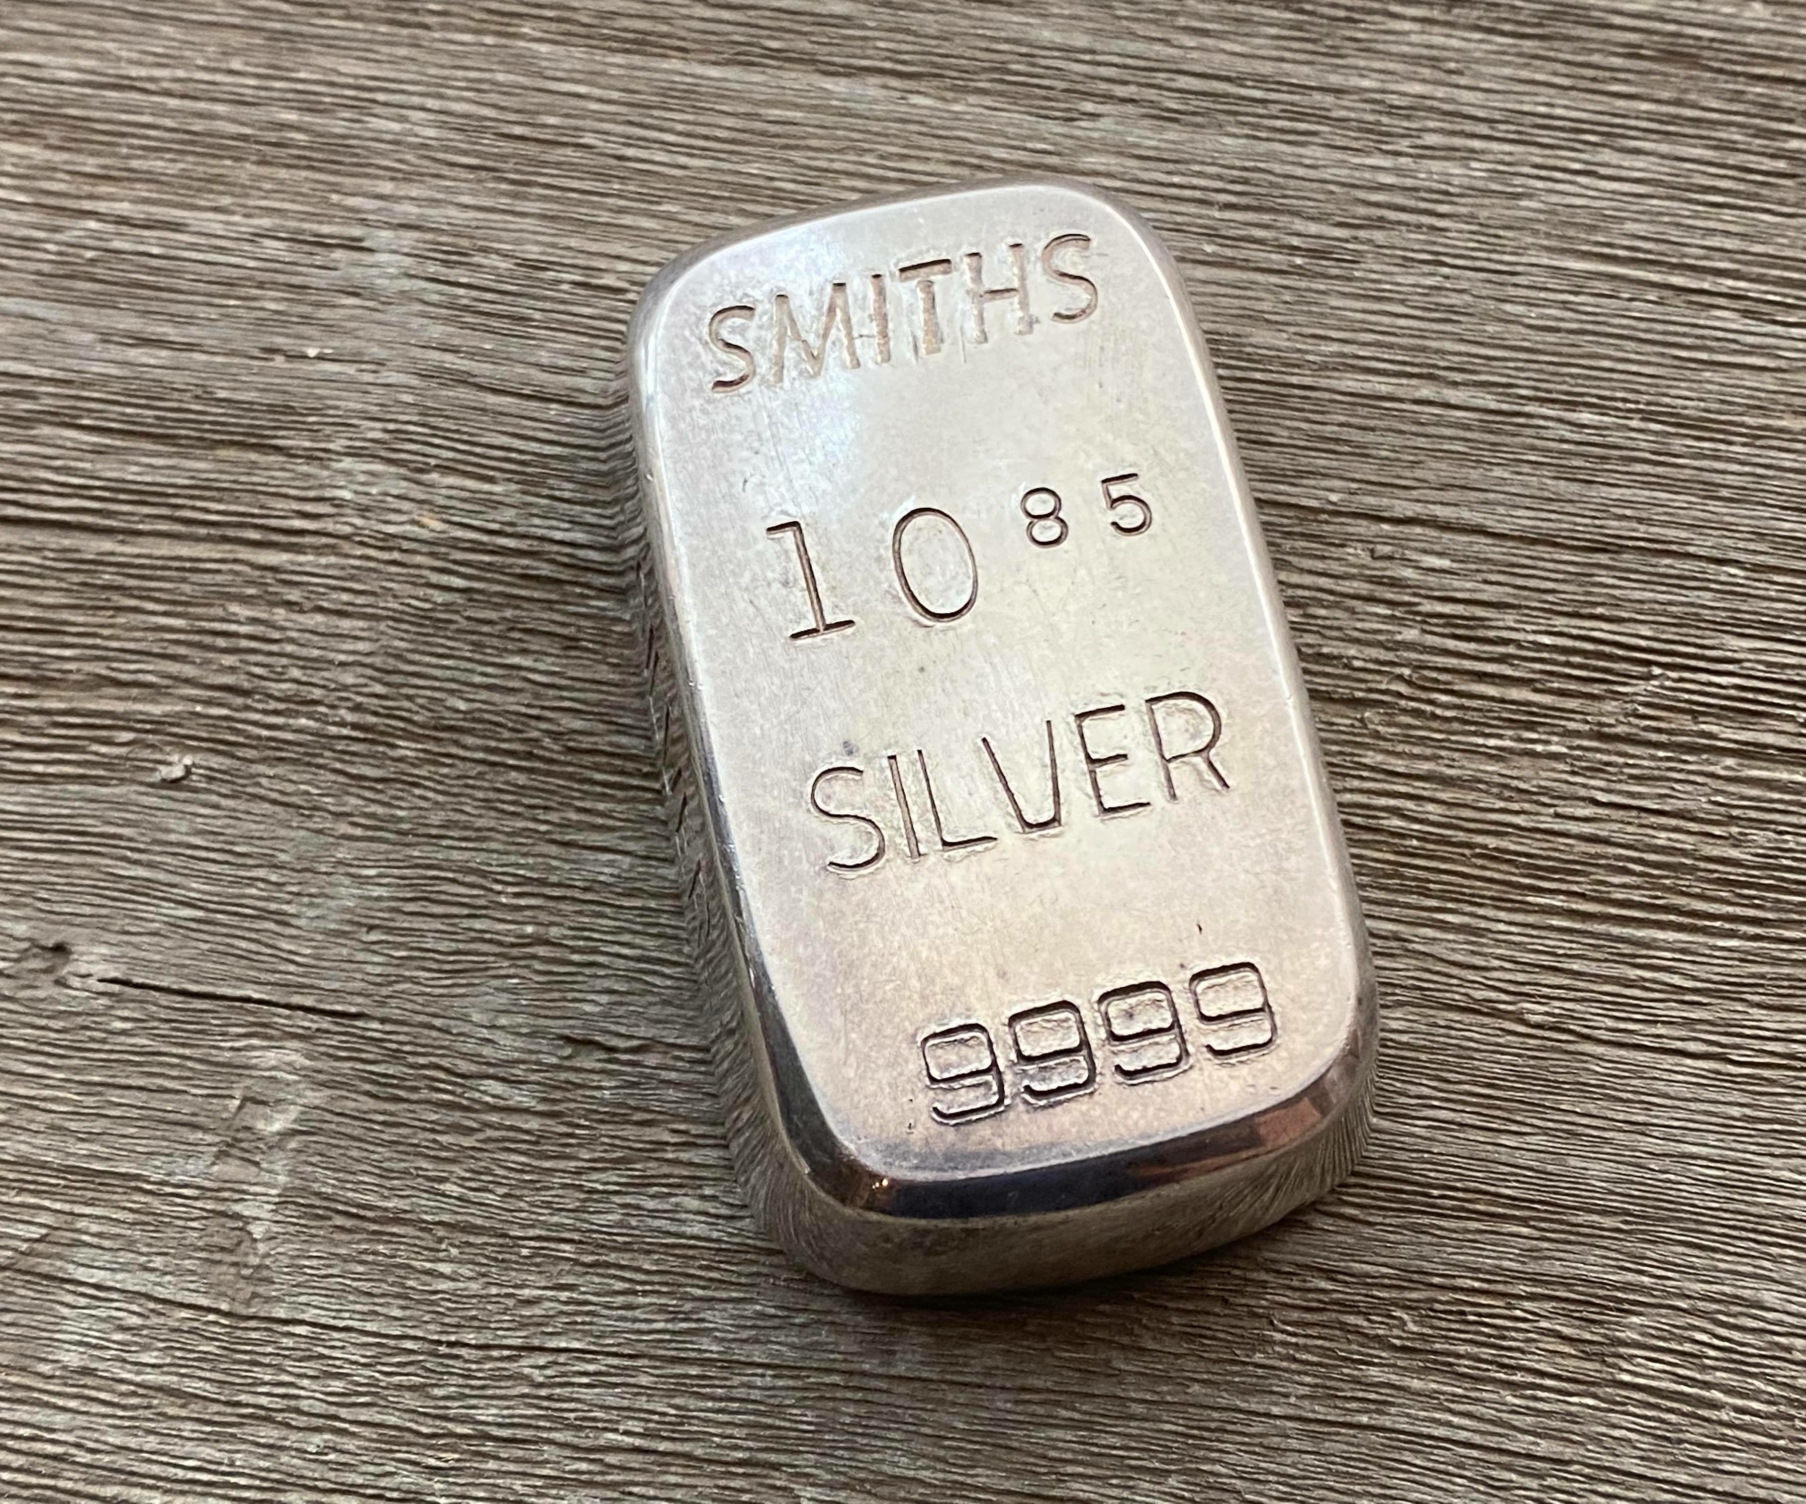 Smiths 10.85 oz vintage silver bar front